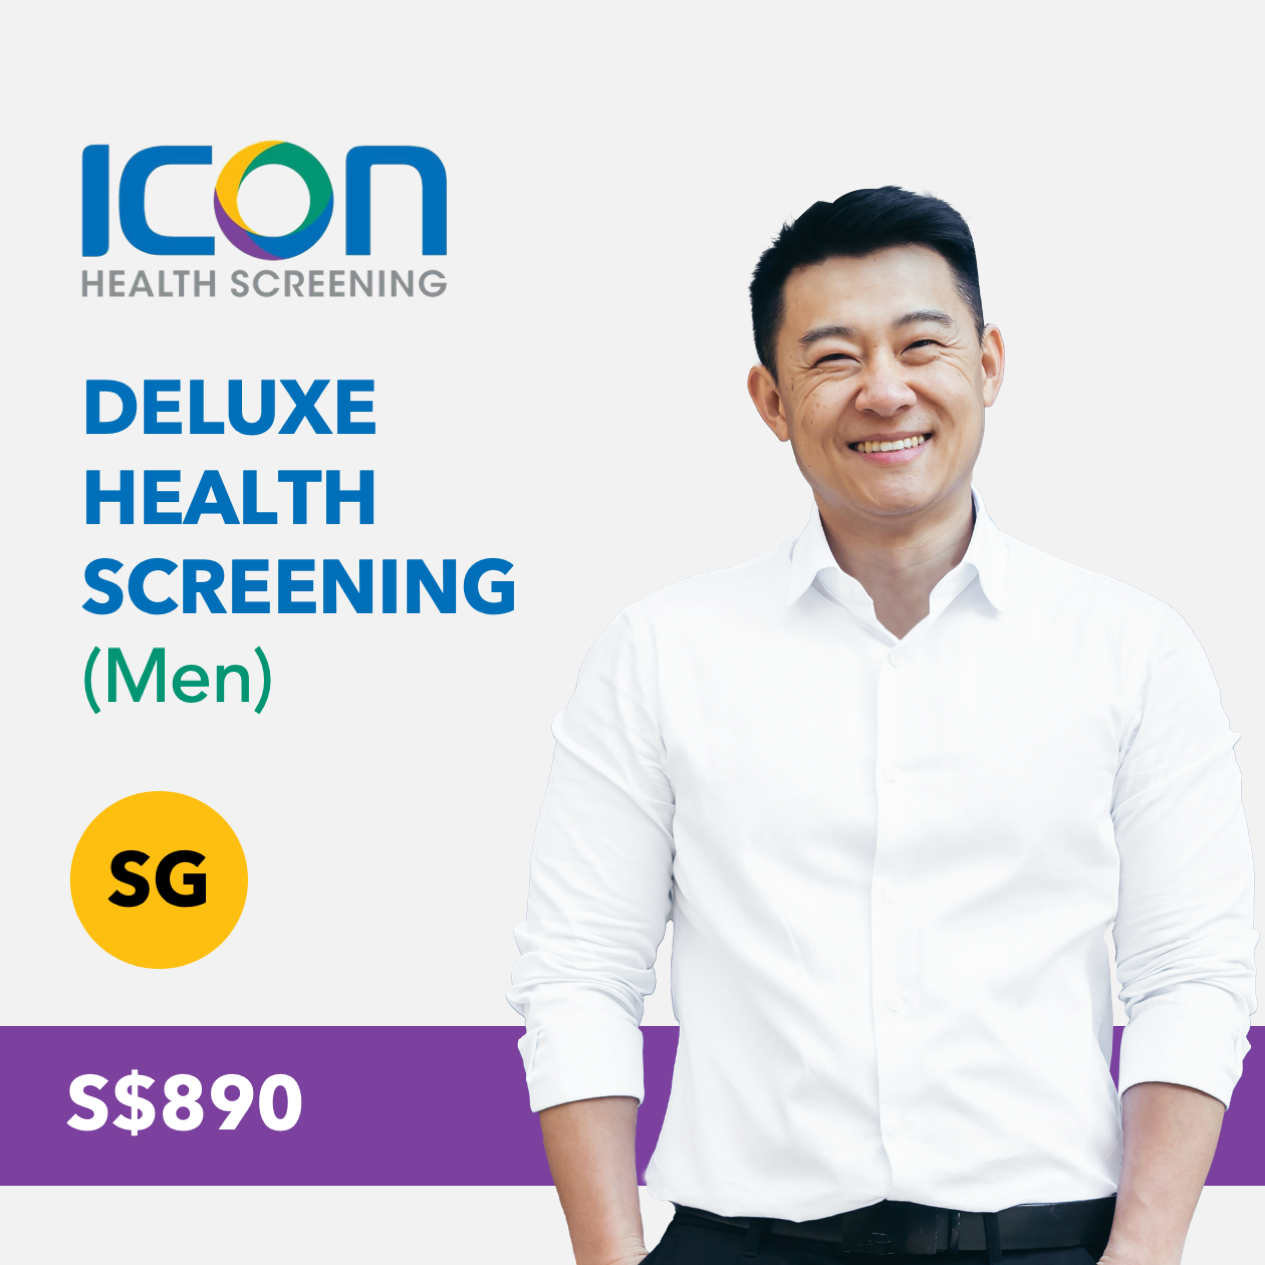 Icon Health Screening (SG) Men's Deluxe Health Screening